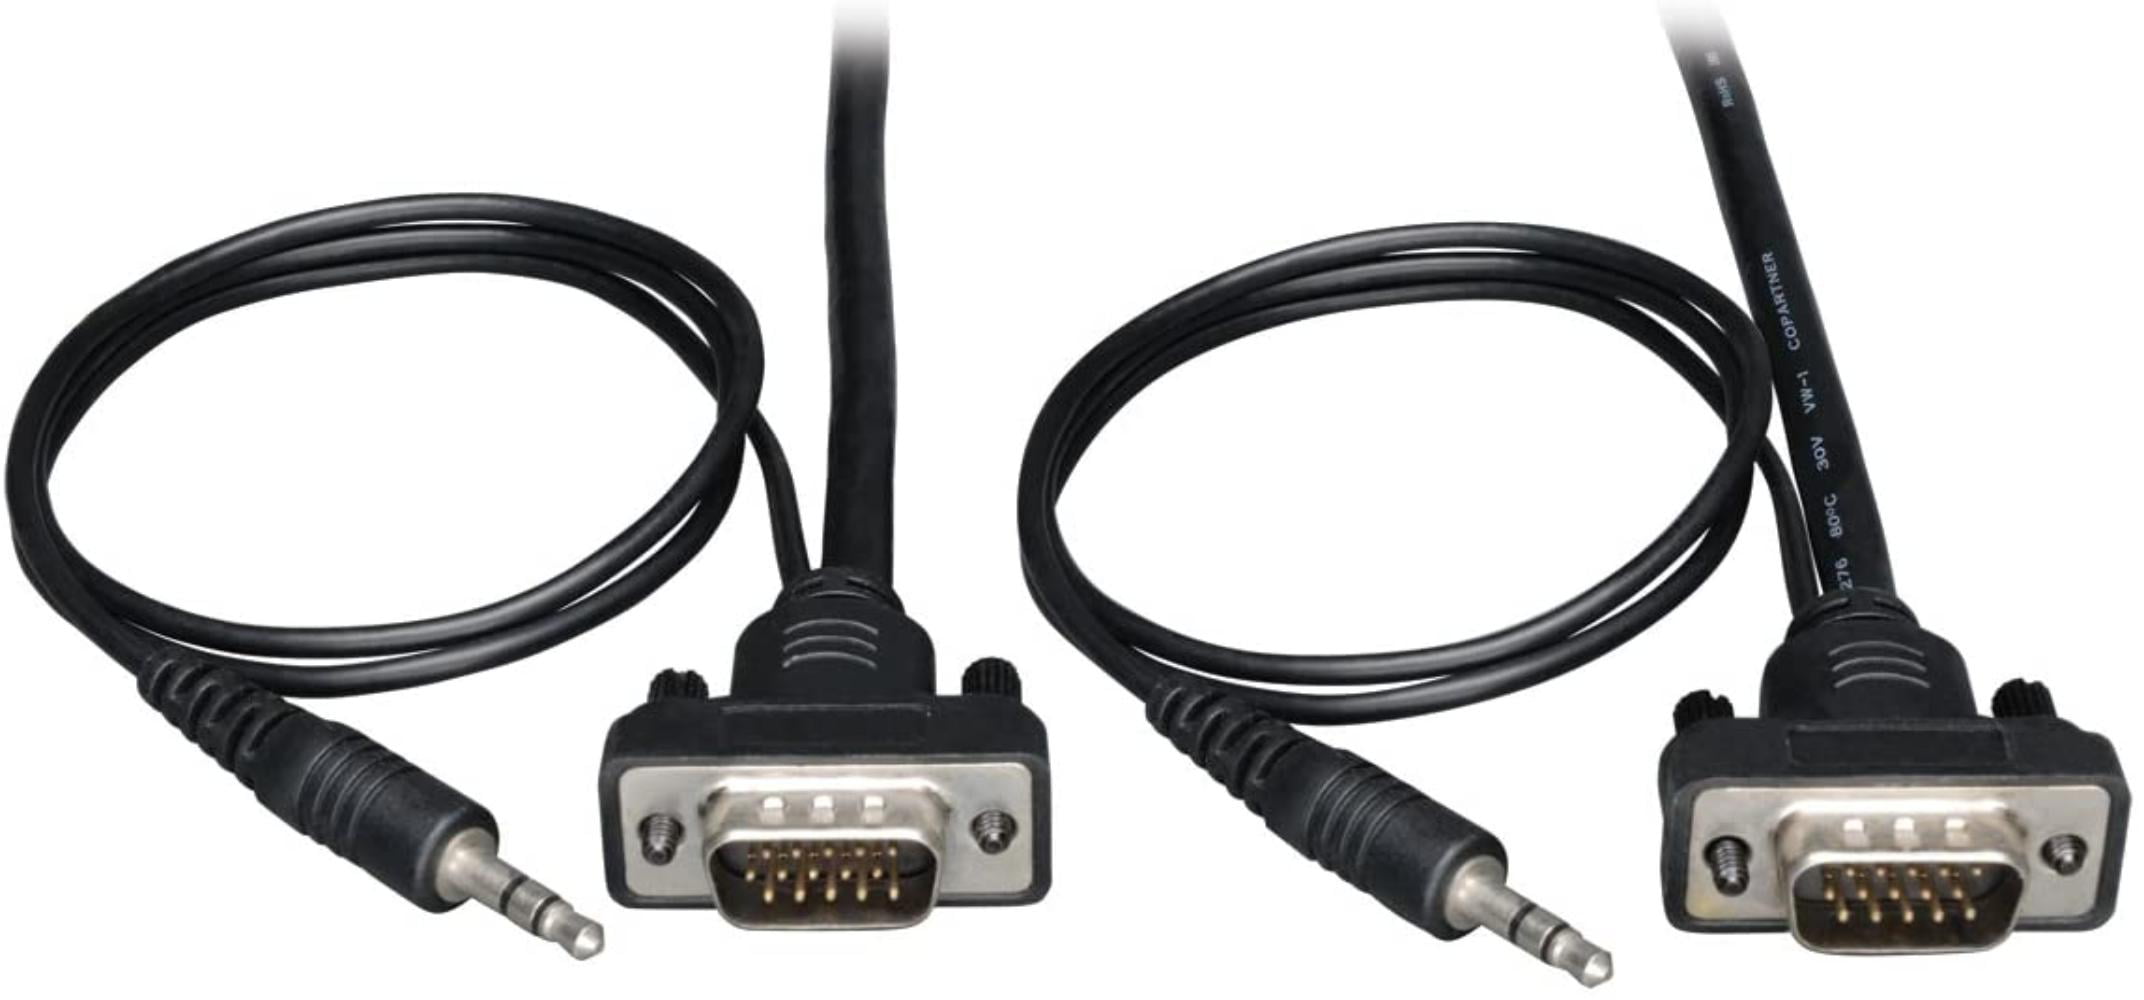 AUX 3.5mm Video Audio Cabl For TV PC MAC Monitor 6FT-30FT Super VGA SVGA HD15 